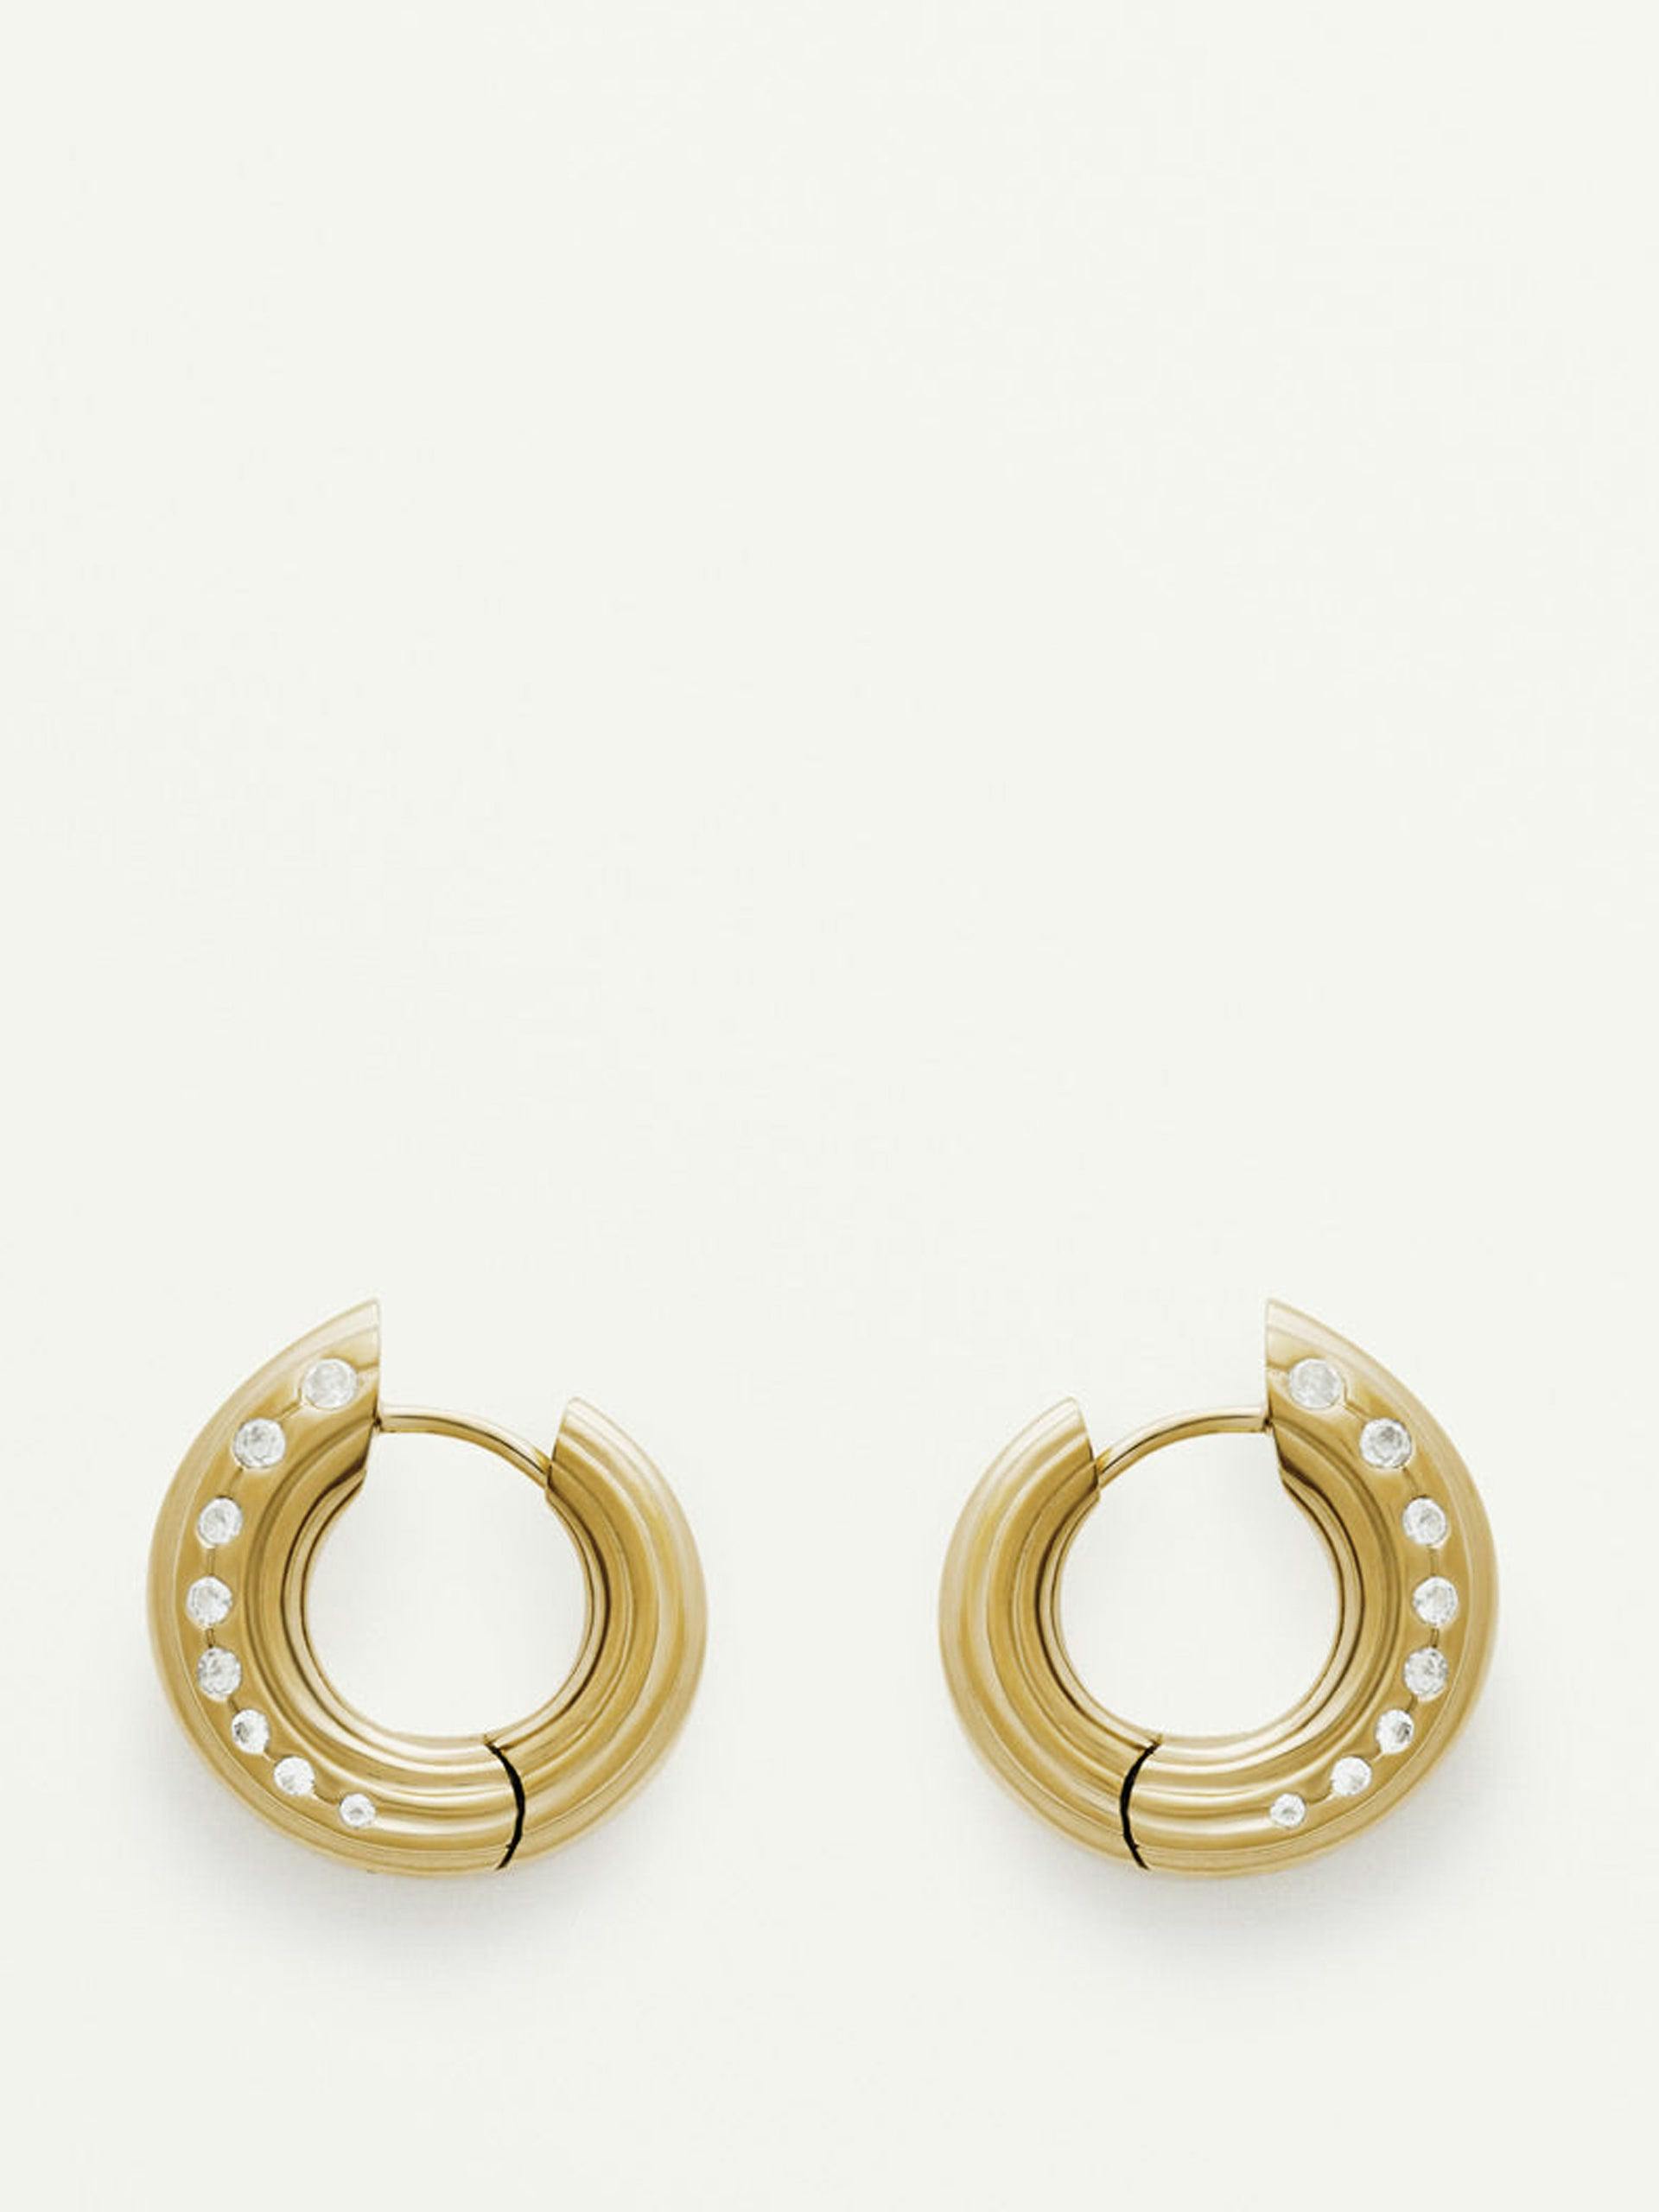 18kt gold vermeil and white topaz hoop earrings